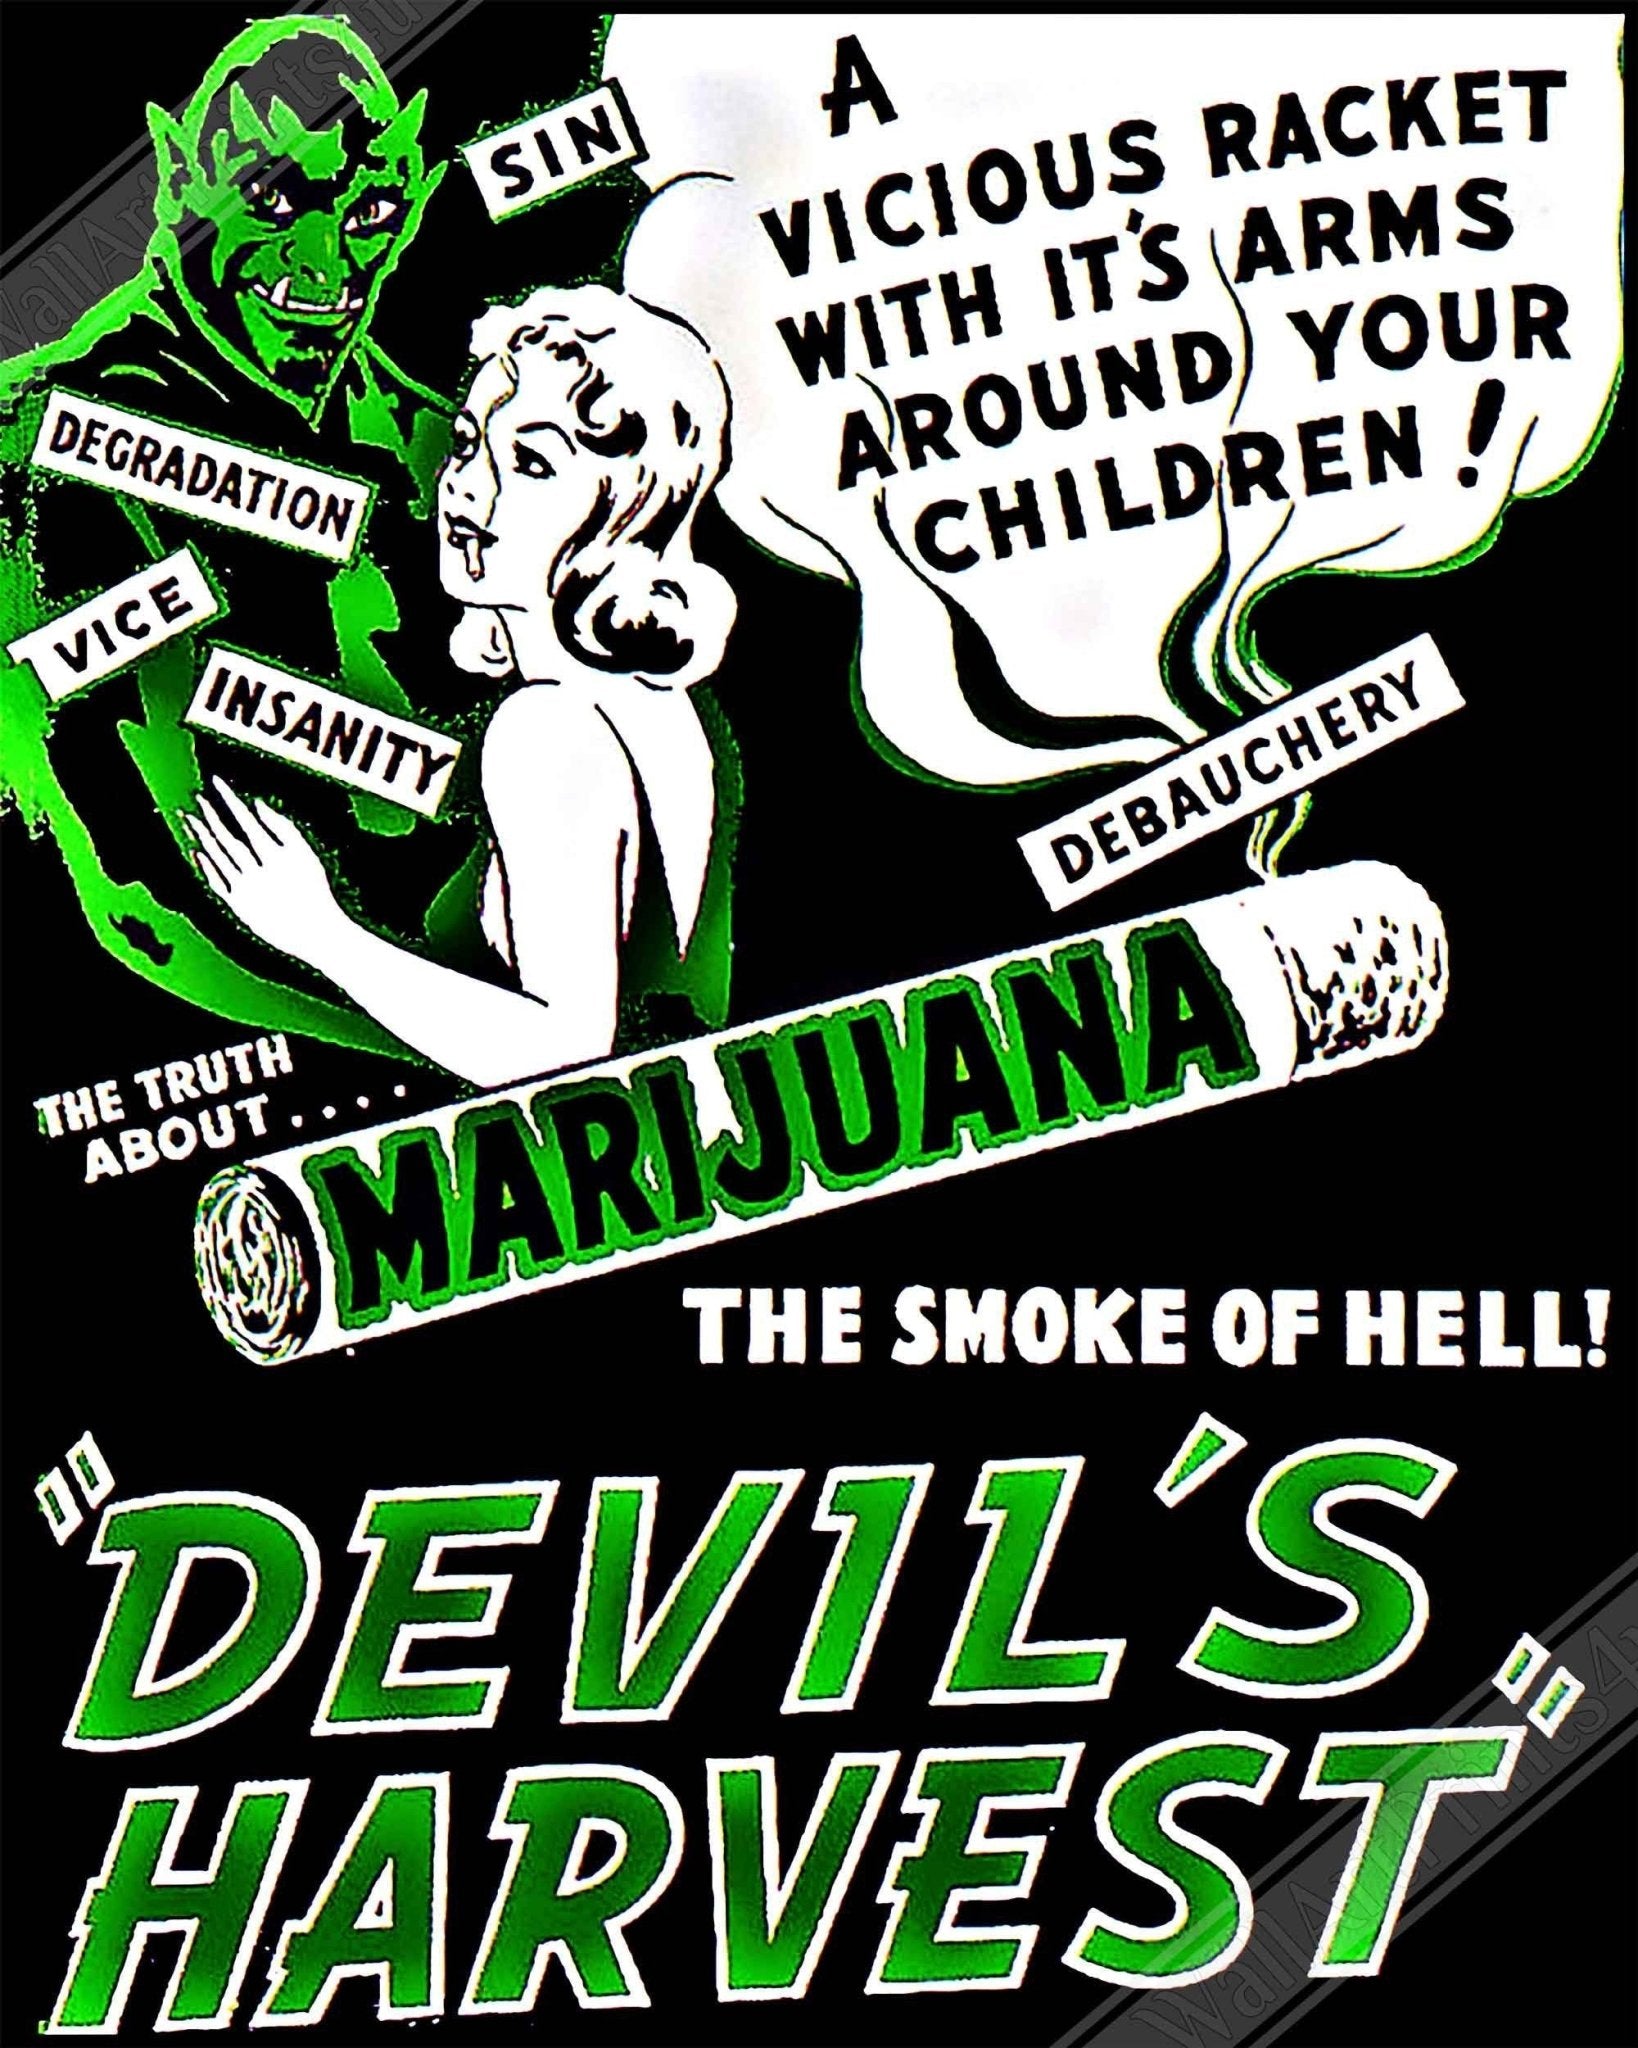 Devils Harvest Marijuana Propaganda Canvas, "Scary" Cannabis Propaganda - Marijuana Propaganda Canvas Print - WallArtPrints4U